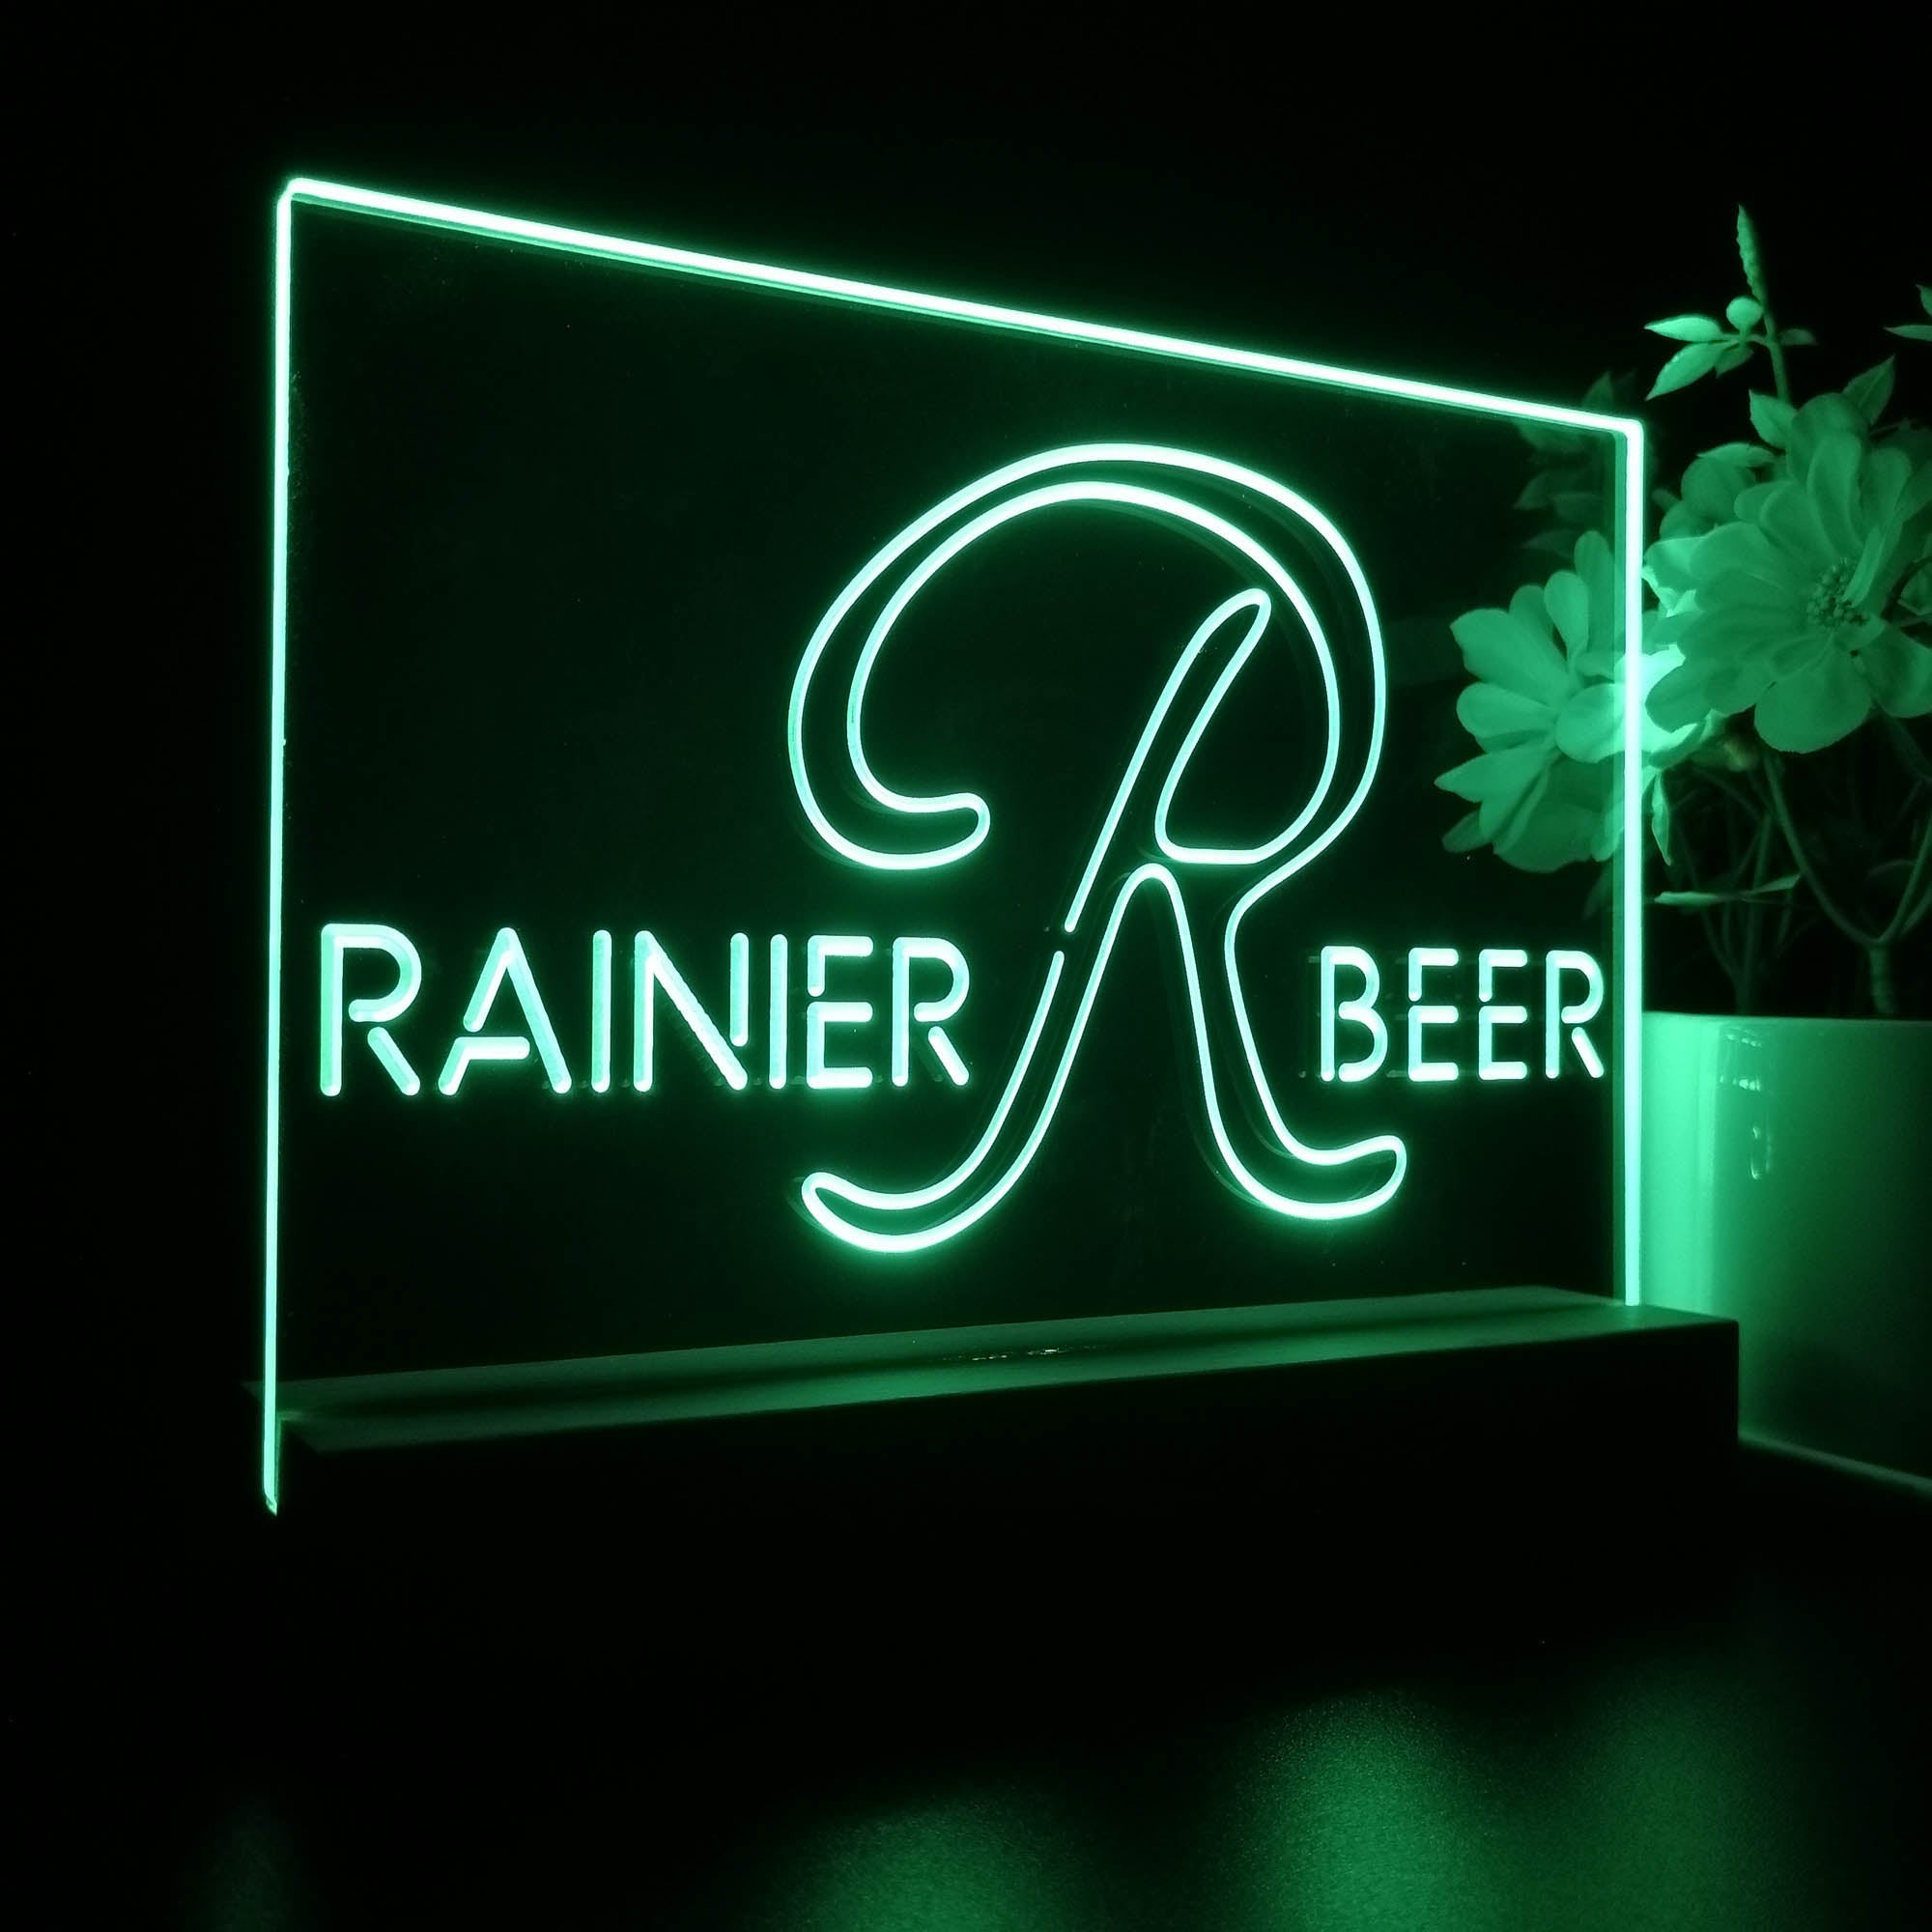 Rainier Beer Night Light LED Sign